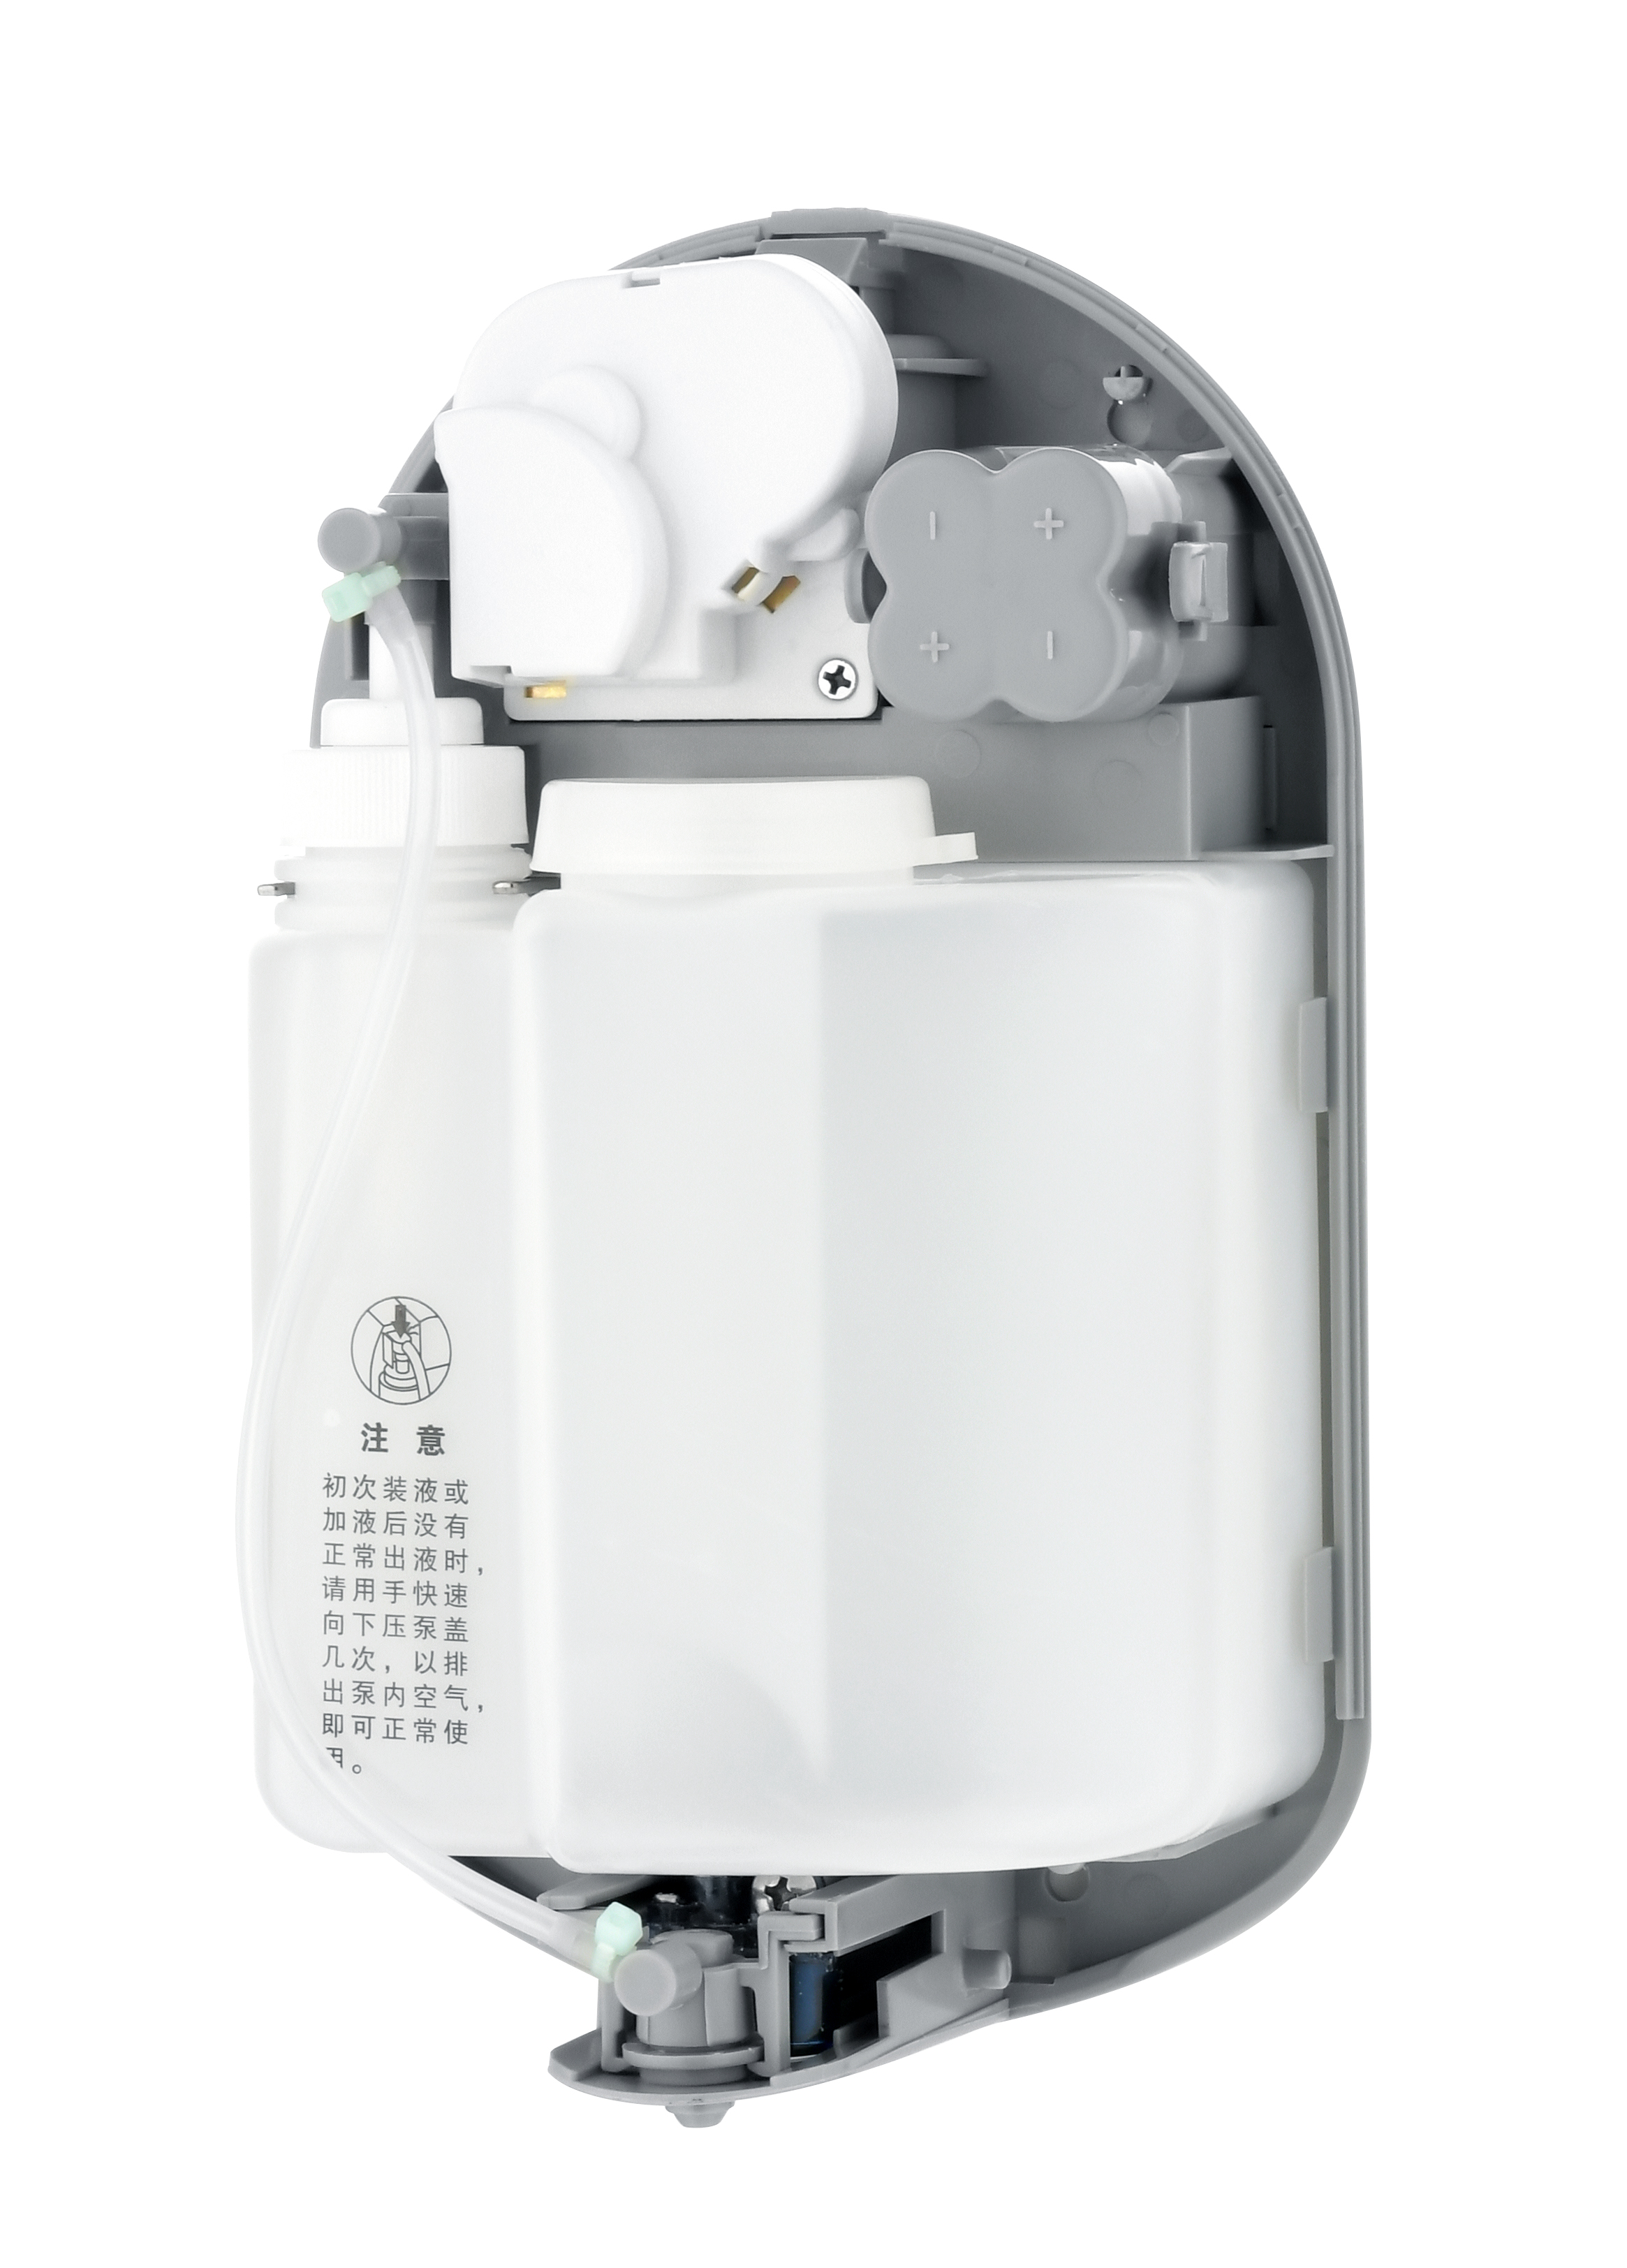 XINDA ZYQ110 Bathroom Soap Dispenser Sets Automatic Hand Soap Dispenser